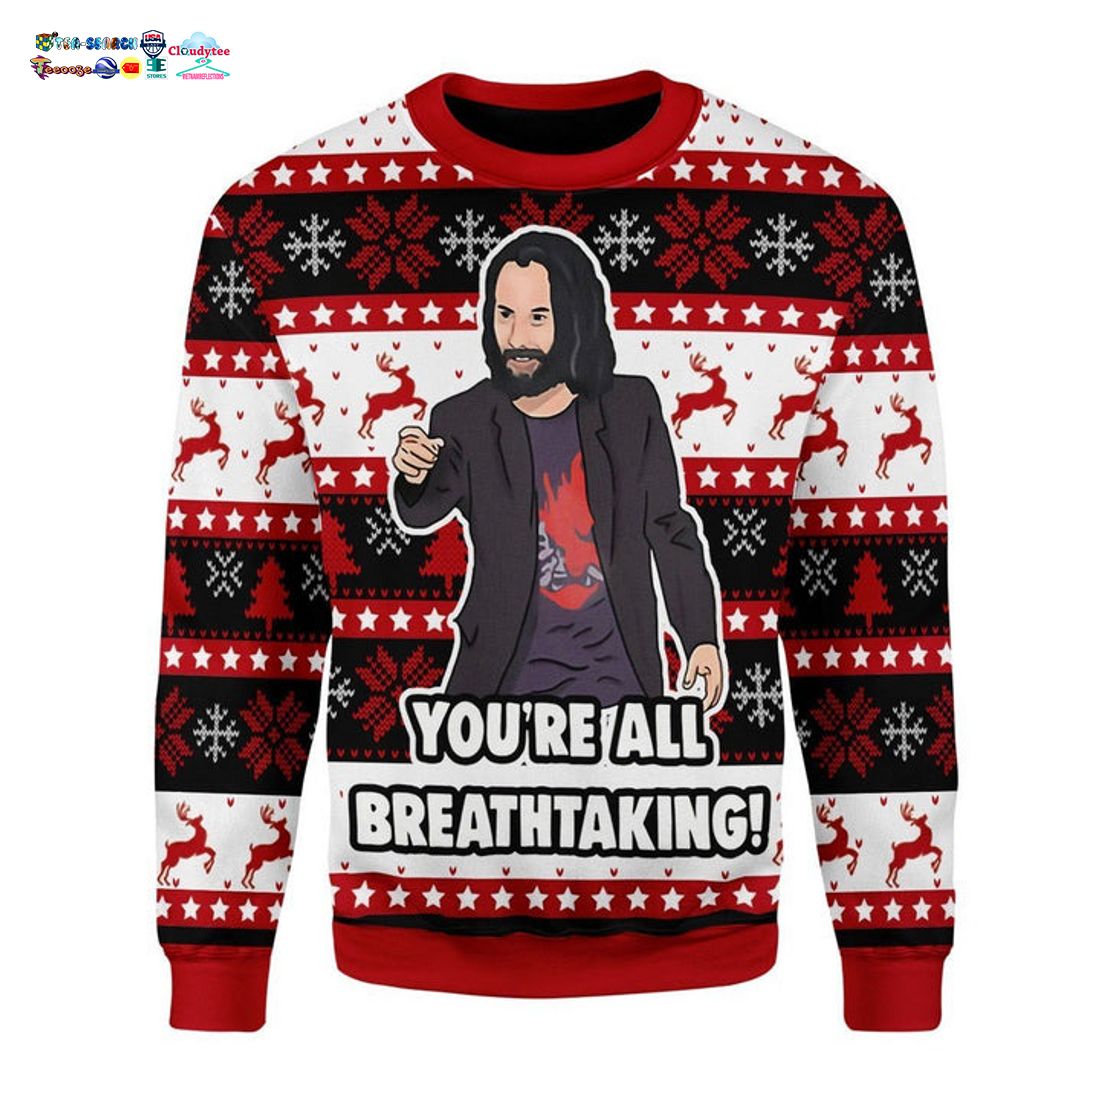 keanu-reeves-youre-all-breathtaking-ugly-christmas-sweater-1-Uw6dM.jpg